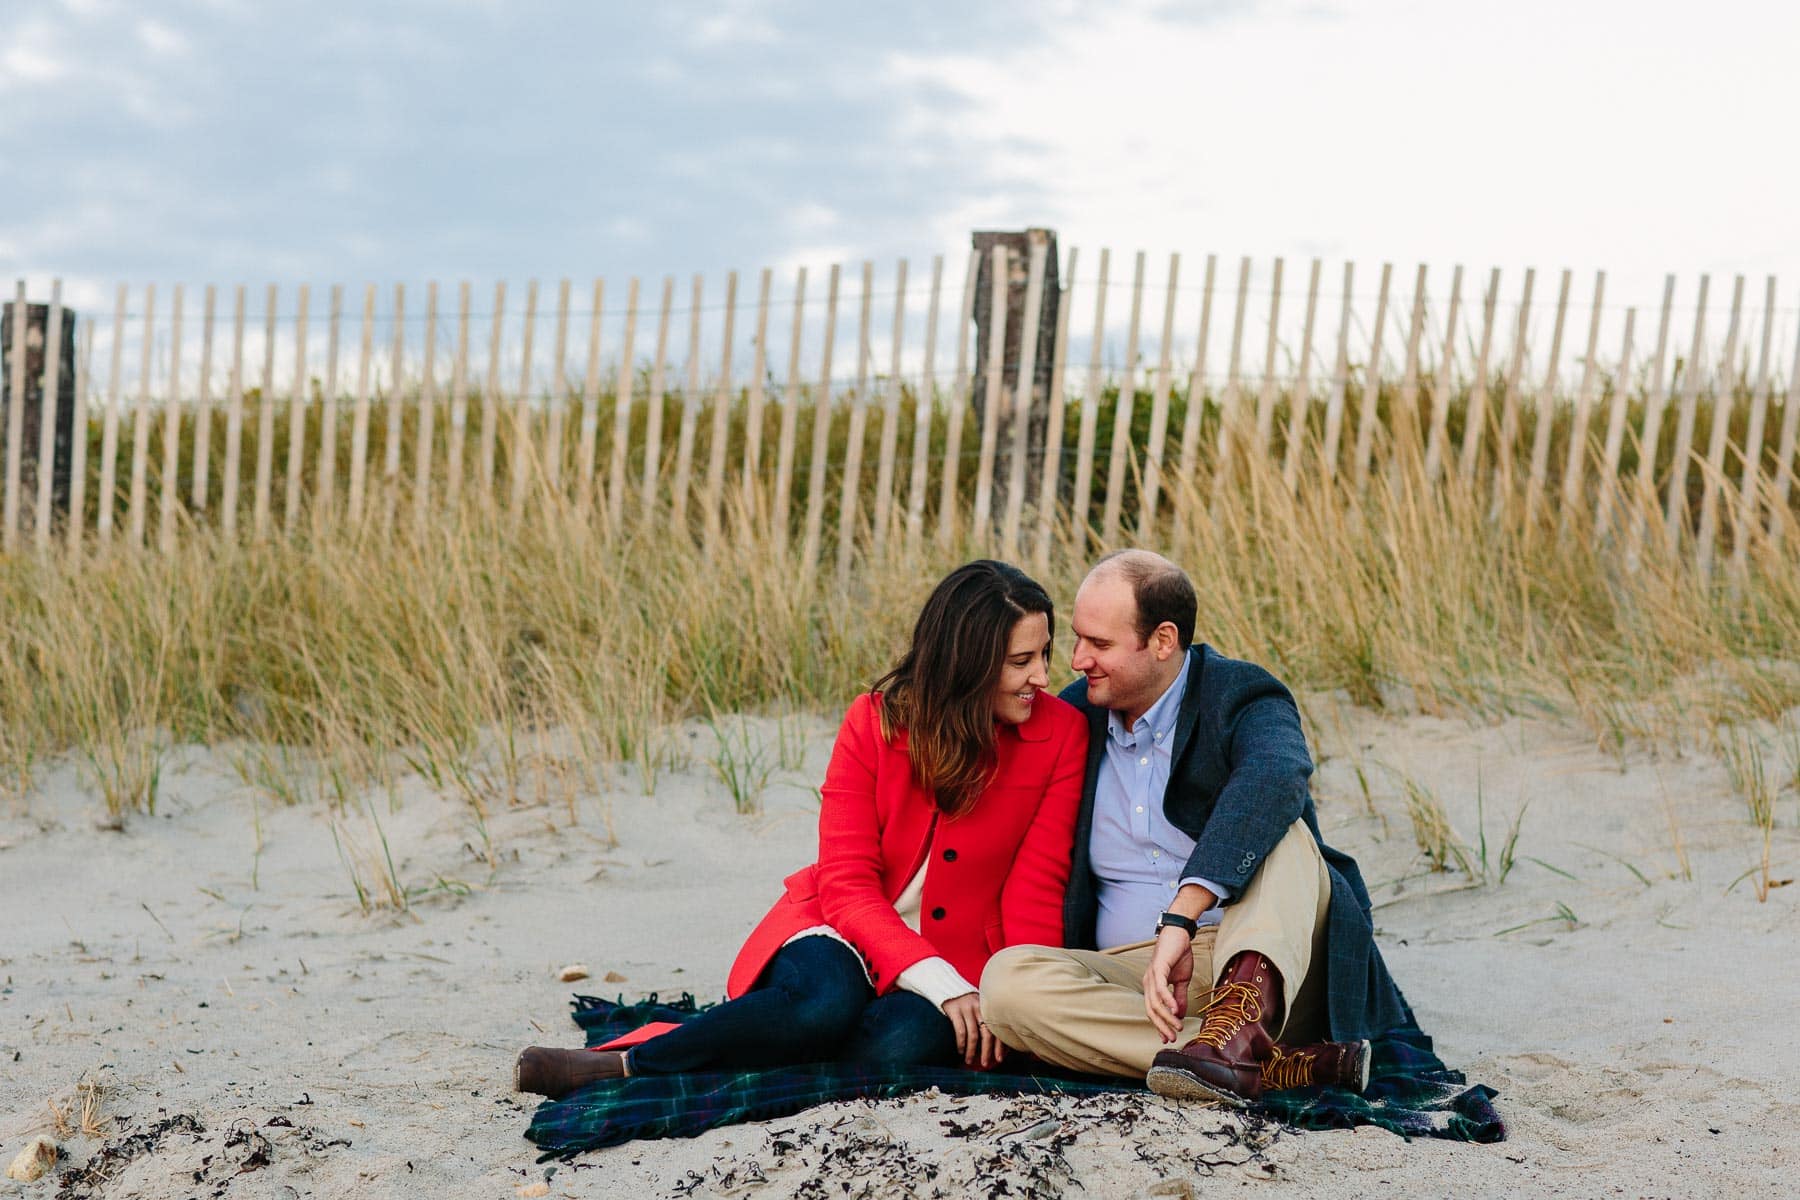 Sunrise engagement session on Duxbury Beach | Boston wedding photographer Kelly Benvenuto